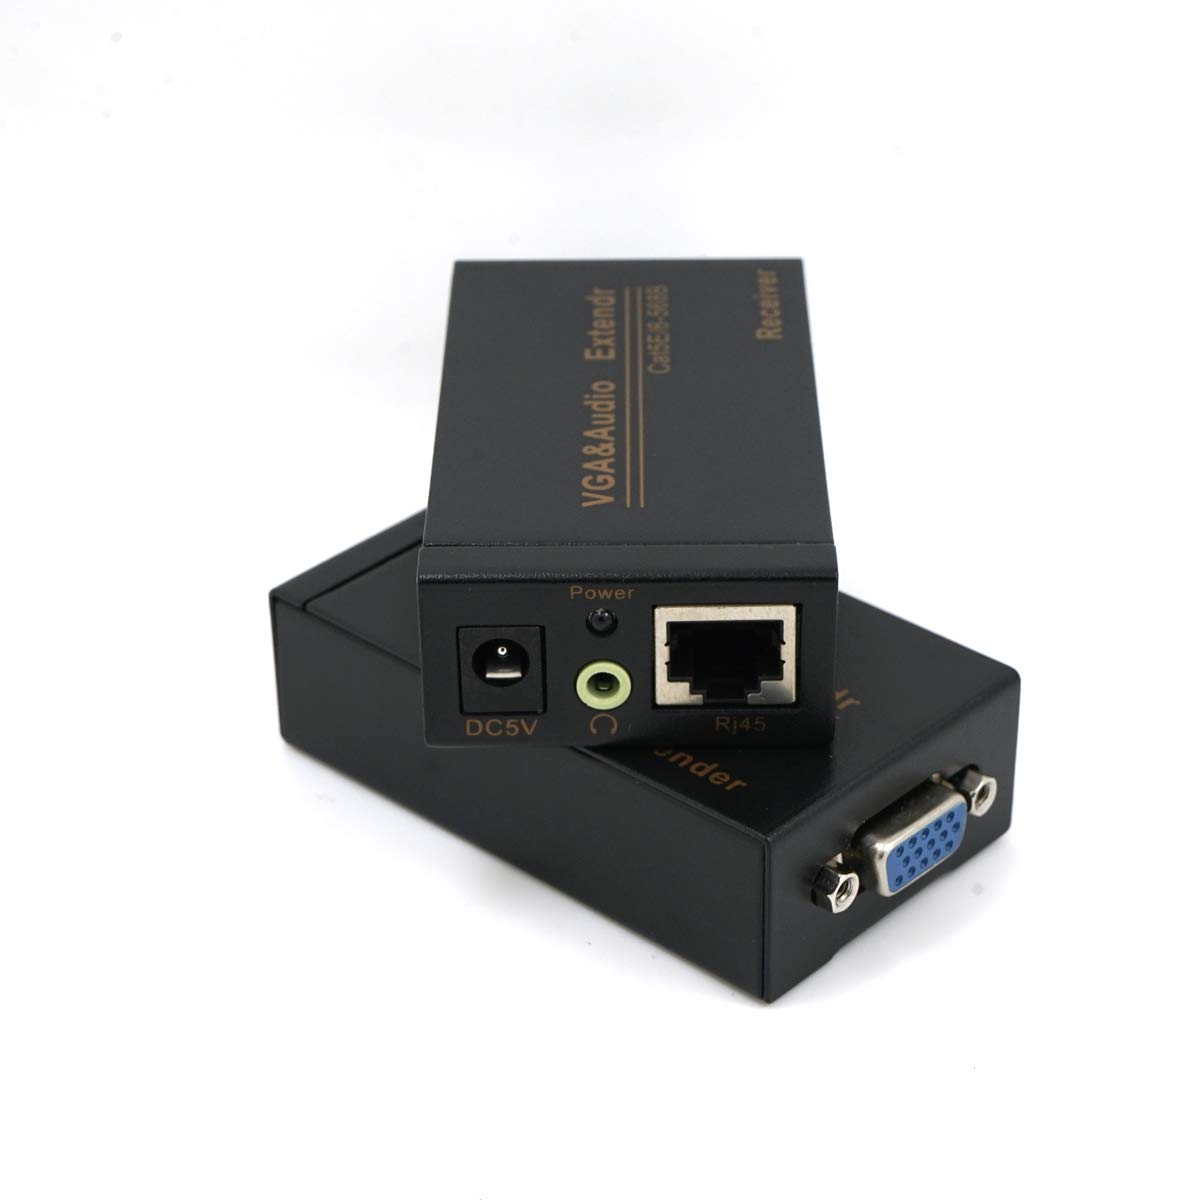 VGA Signal Extender Repeater Adapter Over RJ45 Cat6 Network Cable 100M EU plug